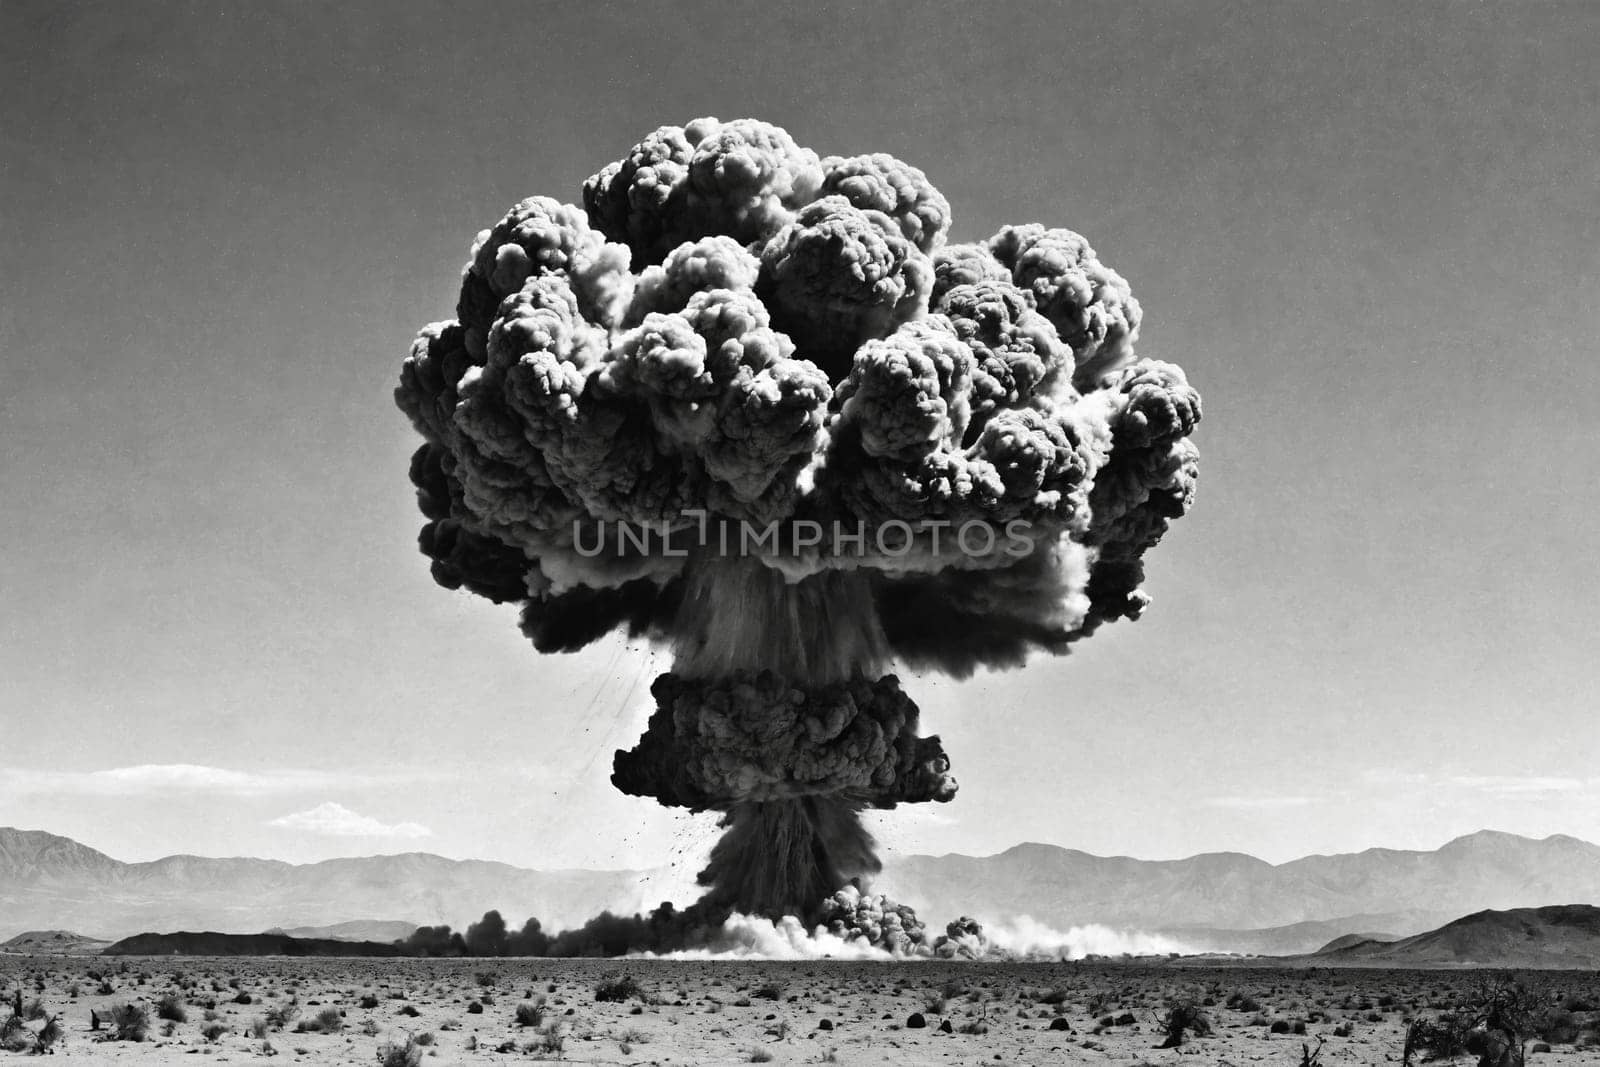 Stark black and white capture of a nuclear blast's mushroom cloud.